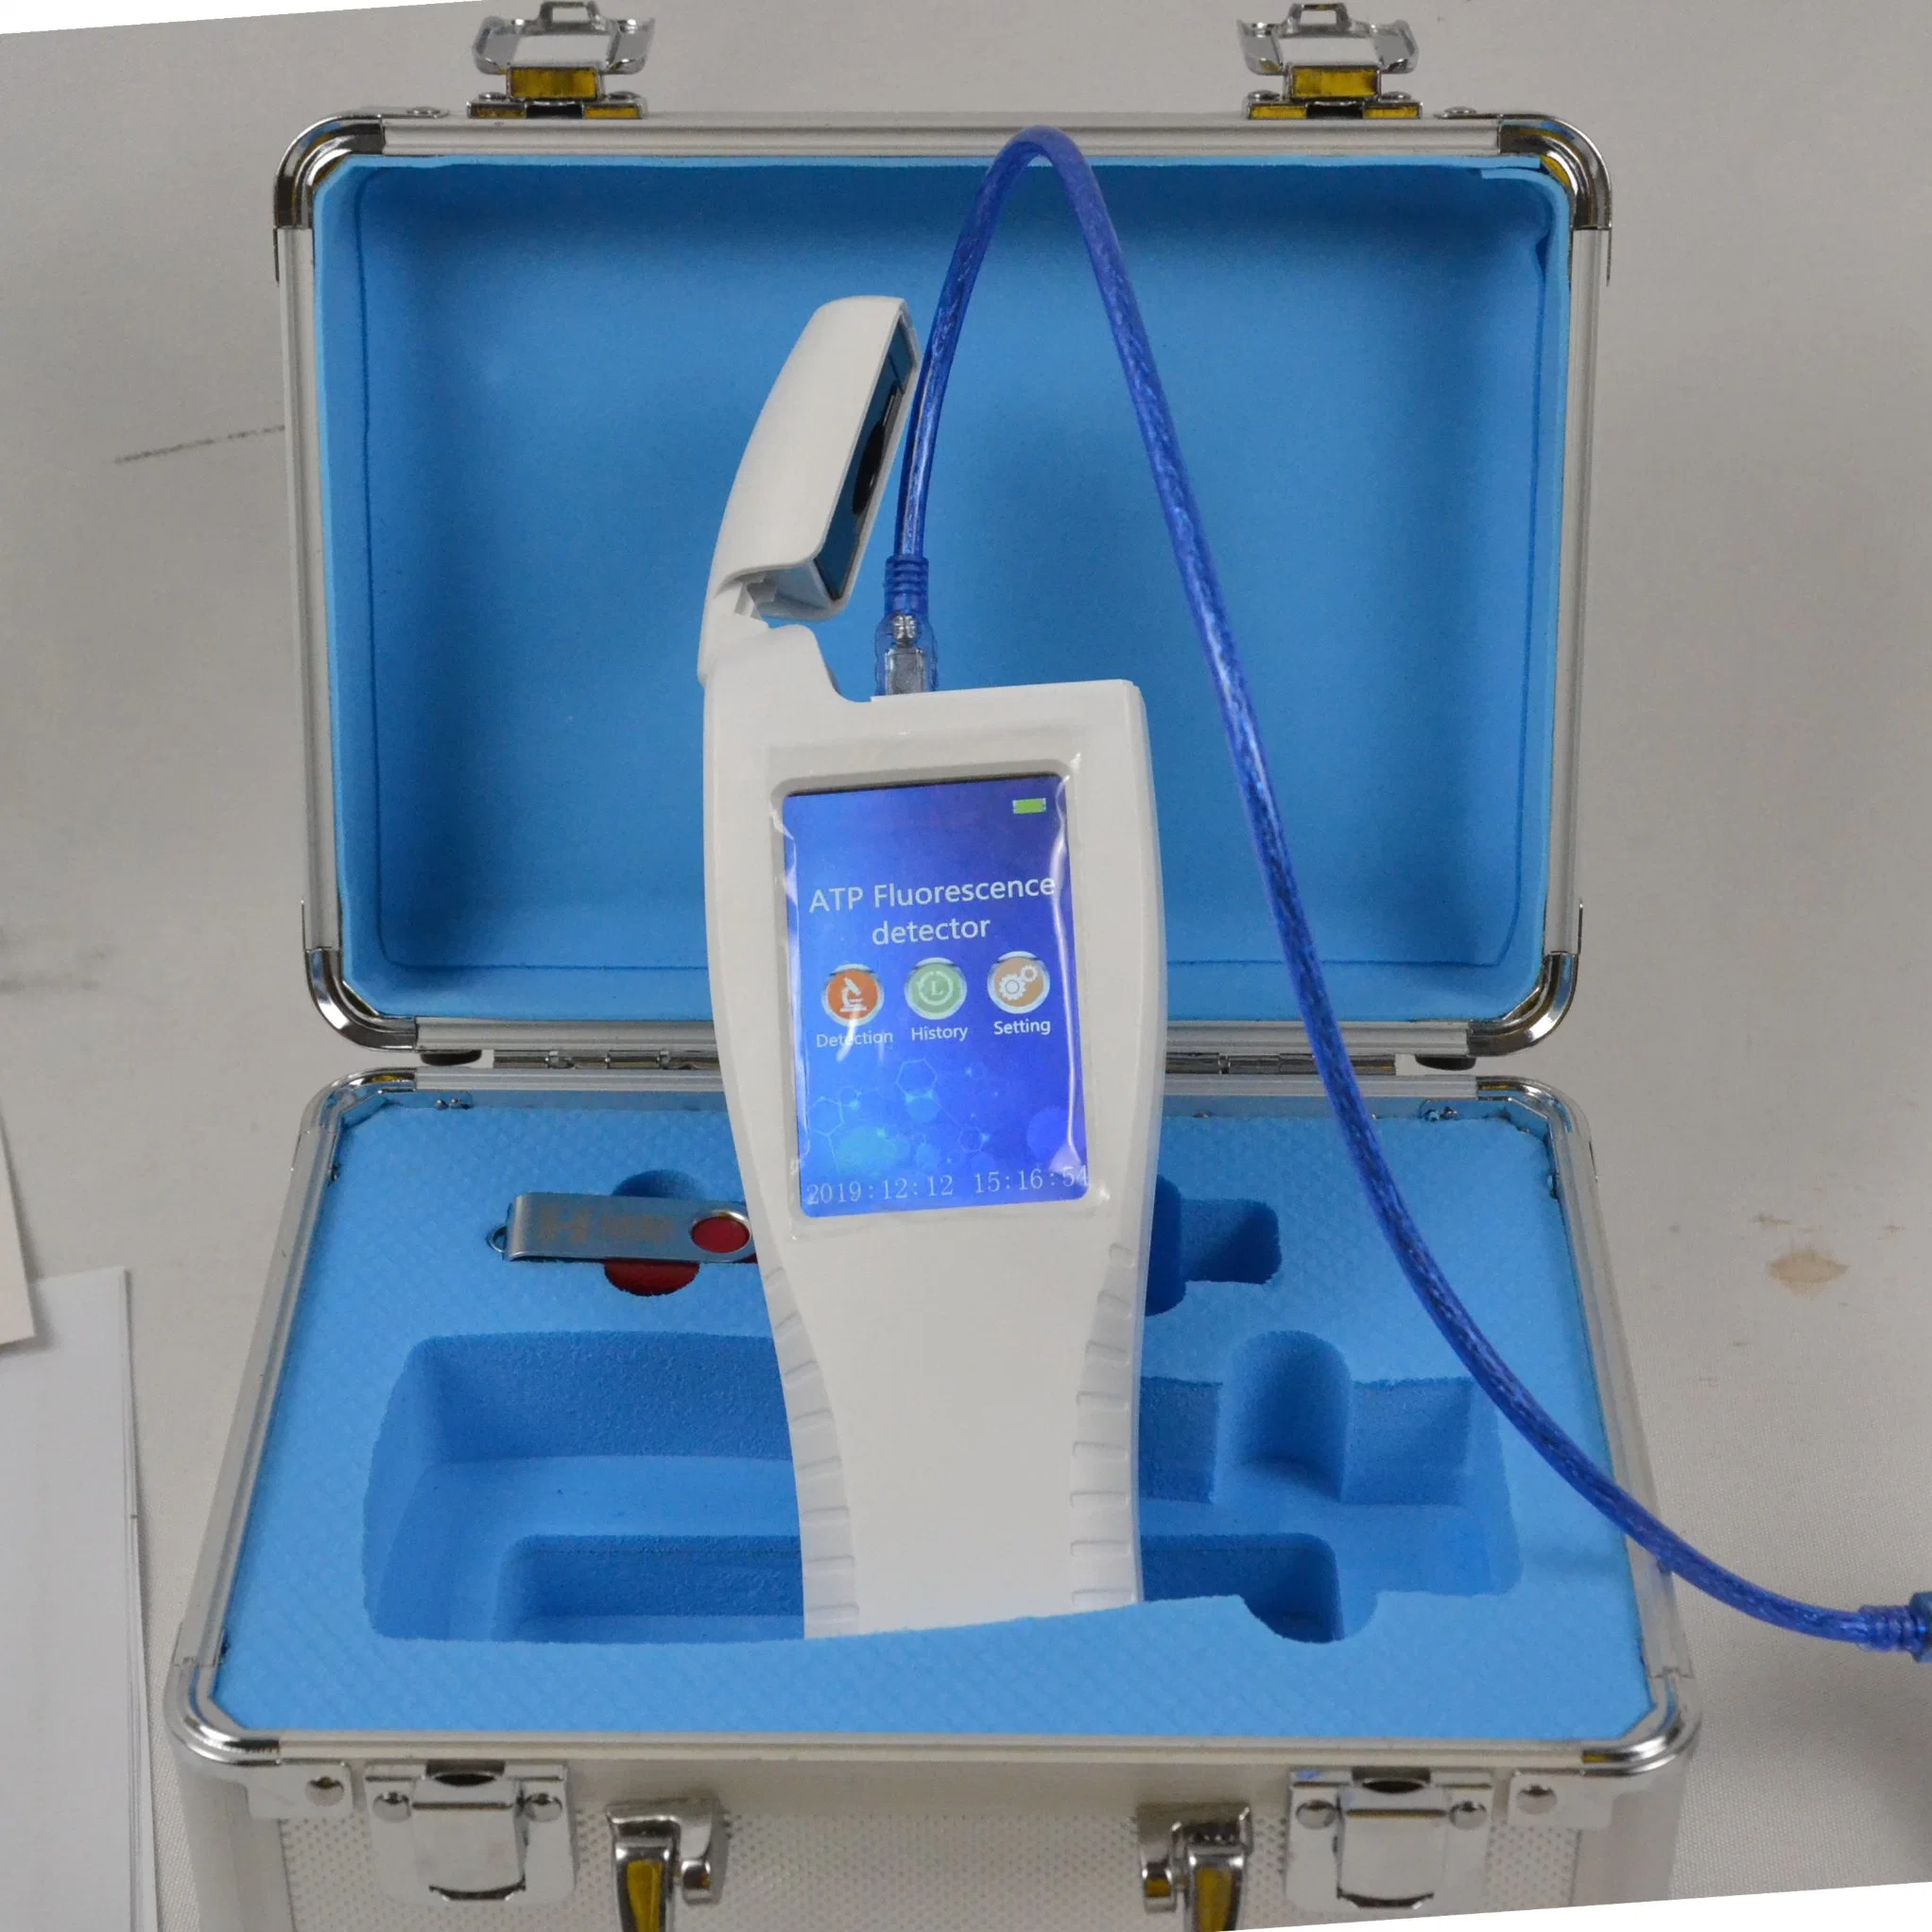 0 bis 9999 Rlus Hygiene System Germ ATP Fluoreszenz-Gerät Tester Messgerät Mesaruement Analysator